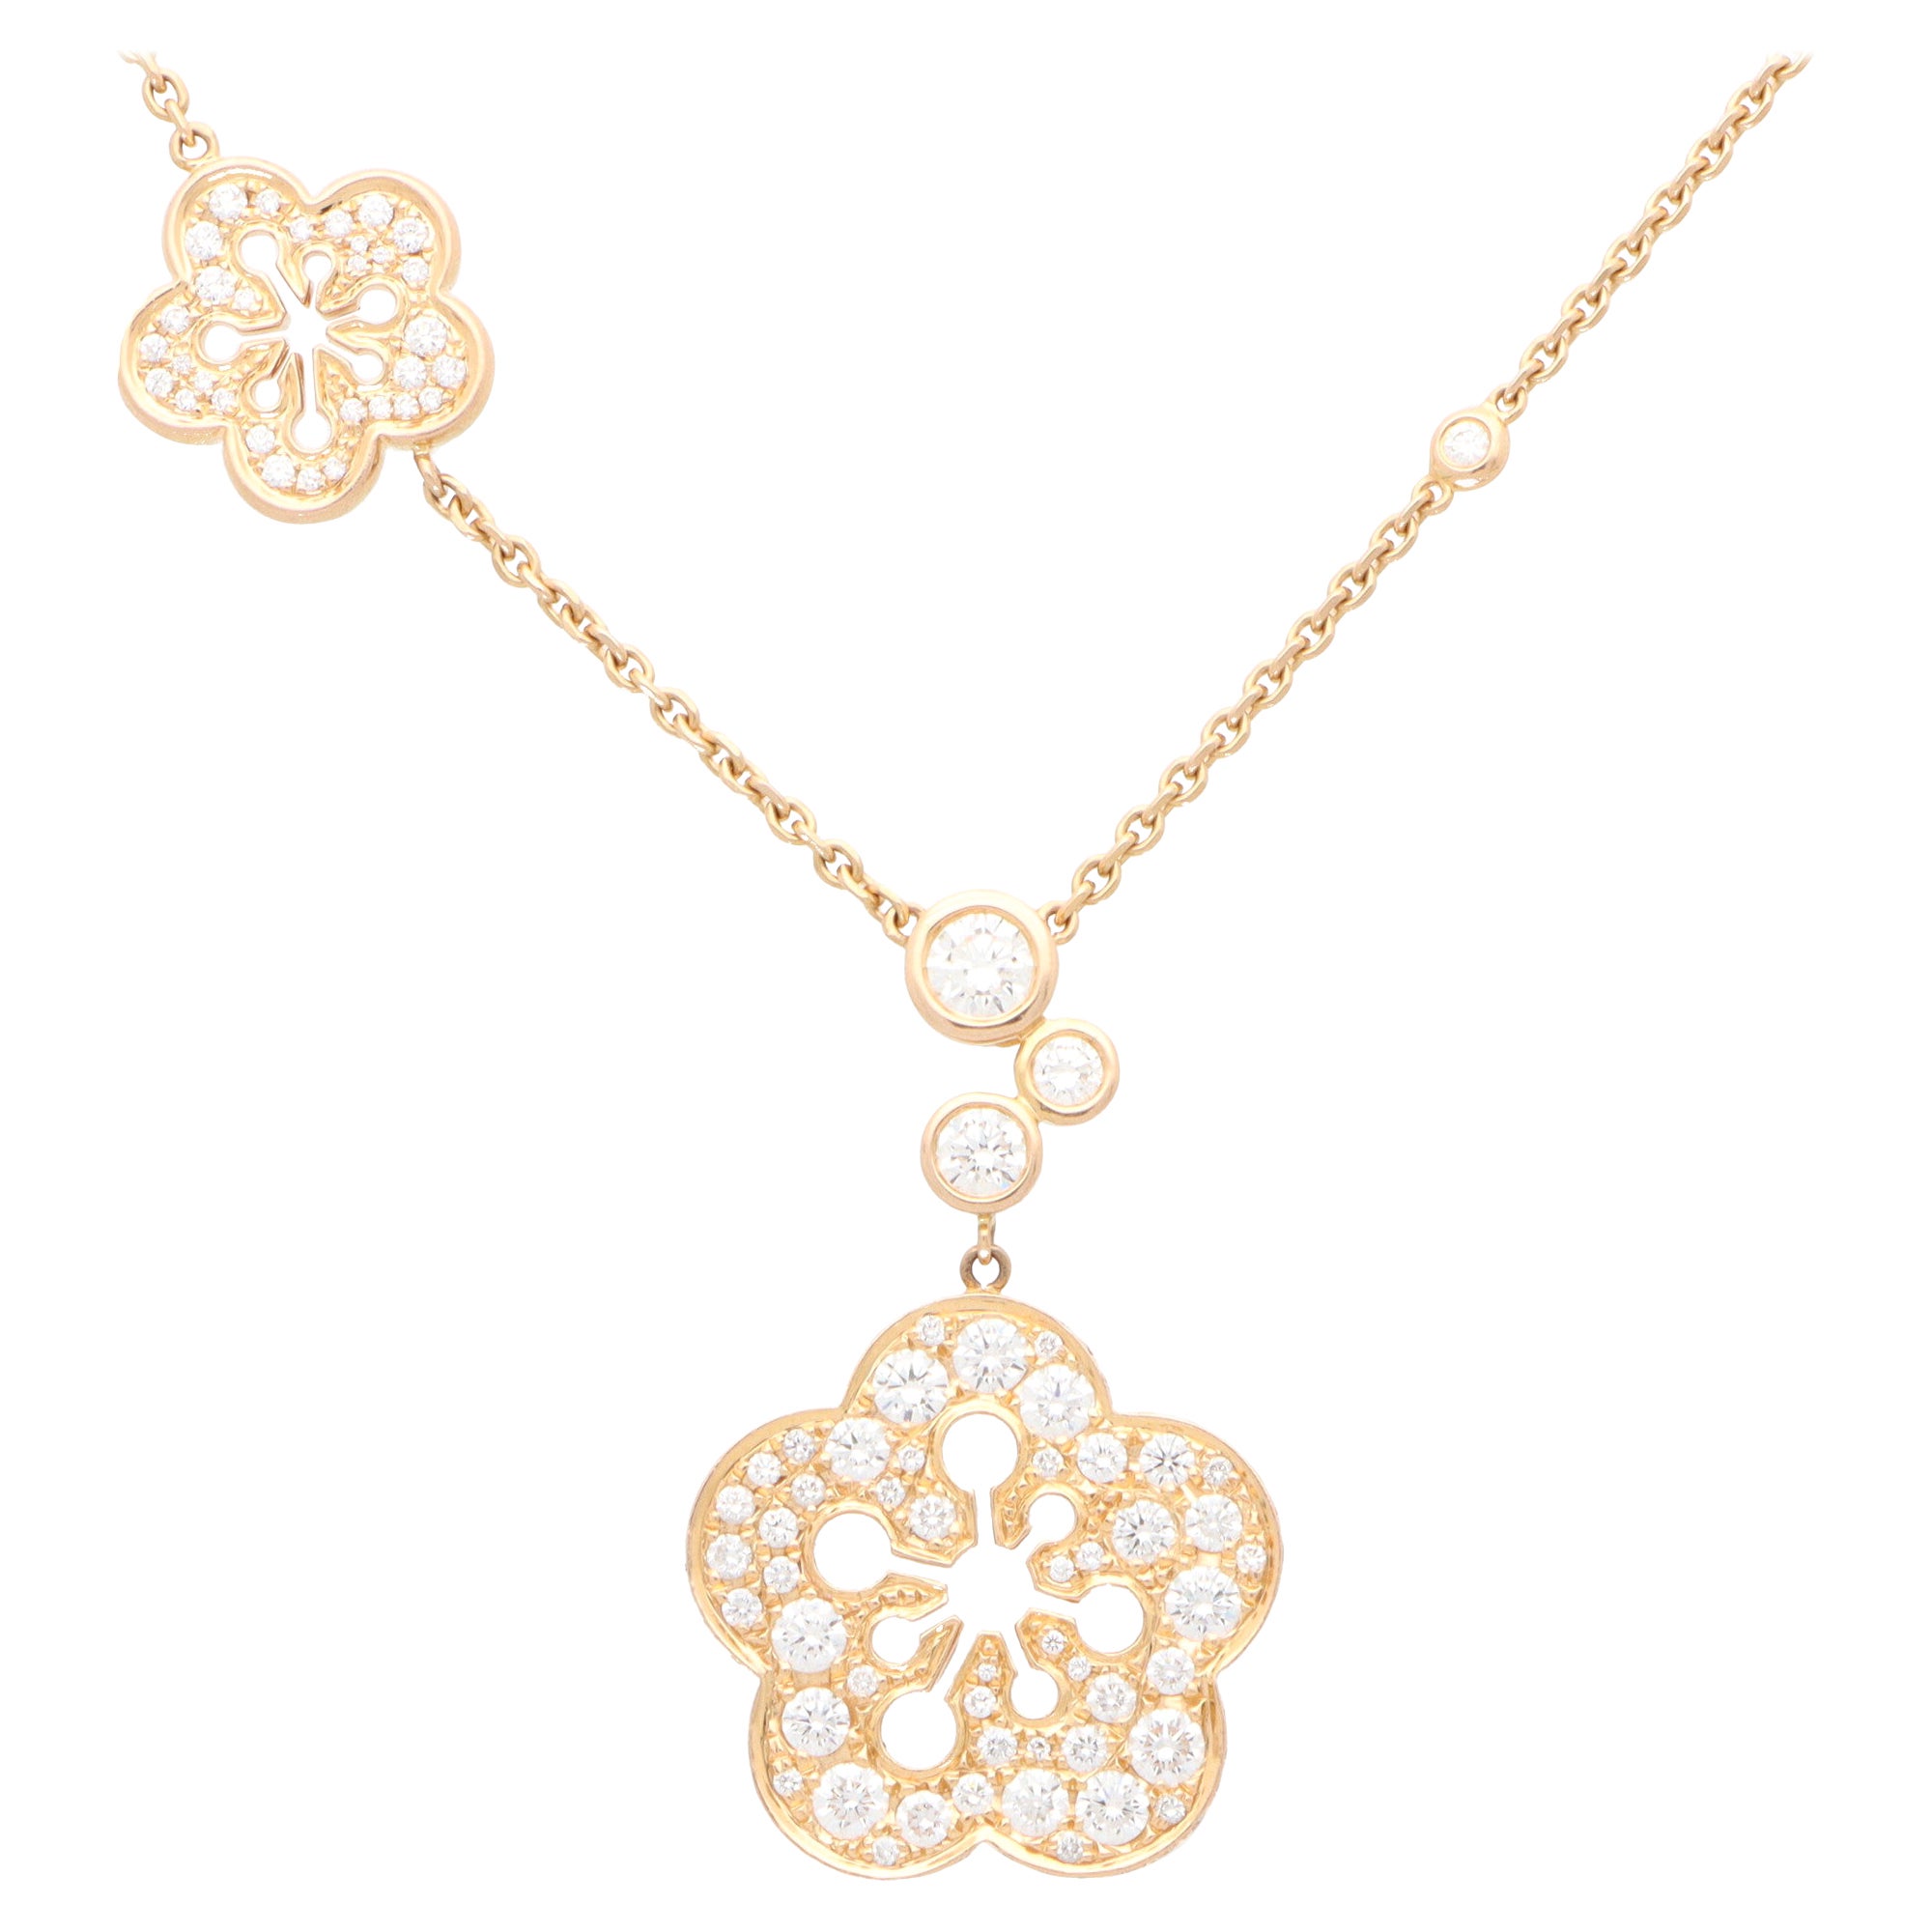 Vintage Boodles Large Blossom Diamond Pendant Necklace Set in 18k Rose Gold